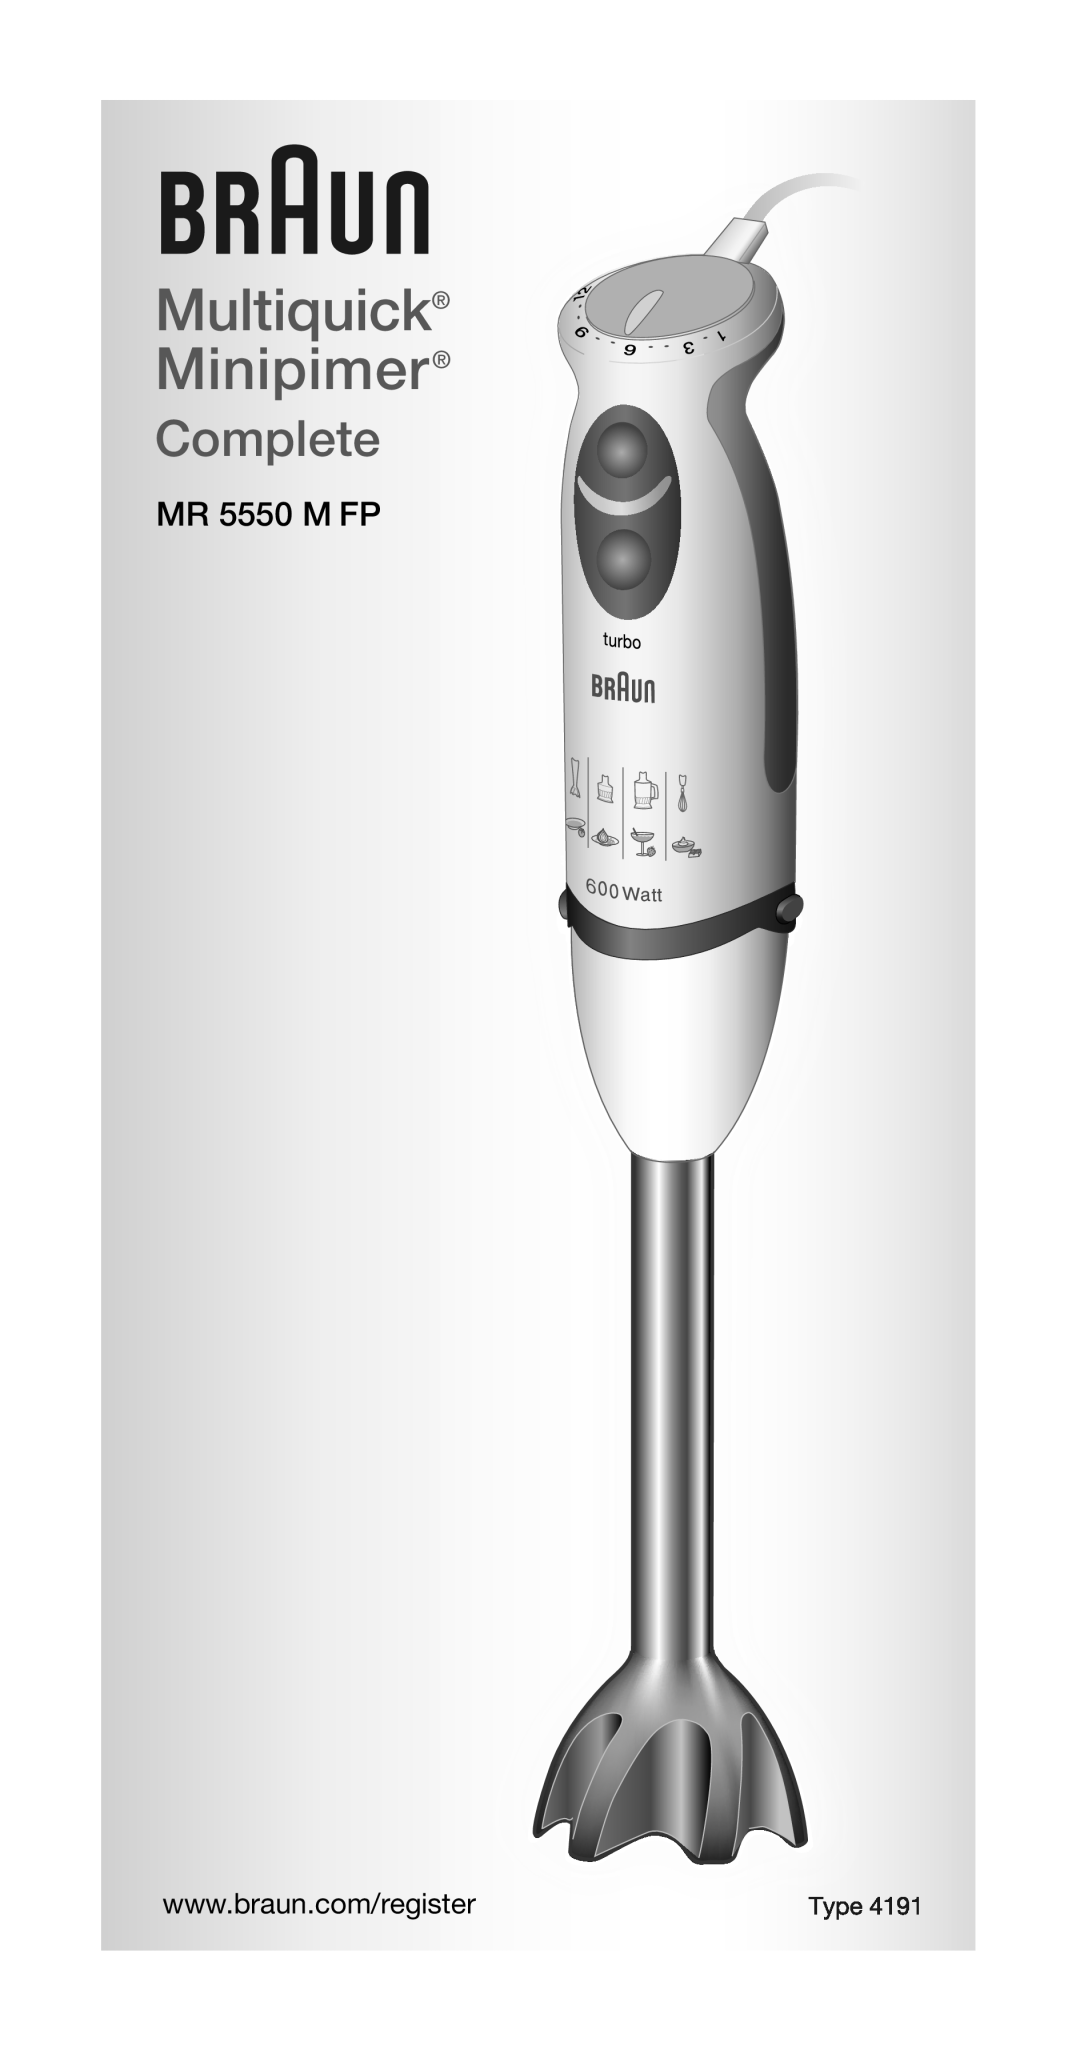 Braun MR 5550 M FP manual Multiquick Minipimer, Complete 